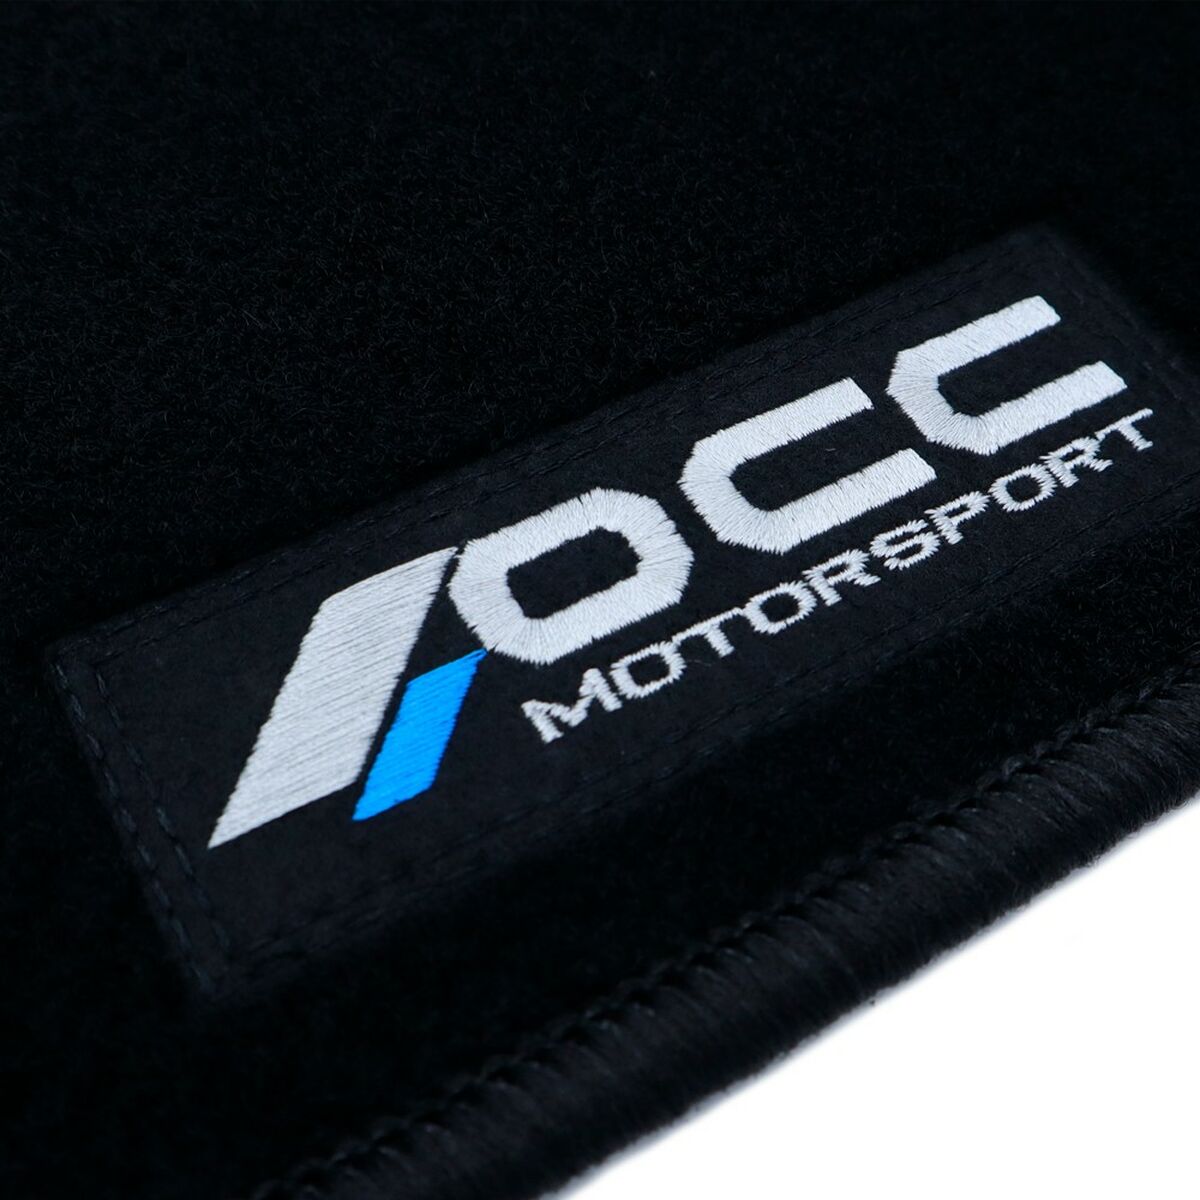 Tappetino per Auto OCC Motorsport OCCDC0013LOG